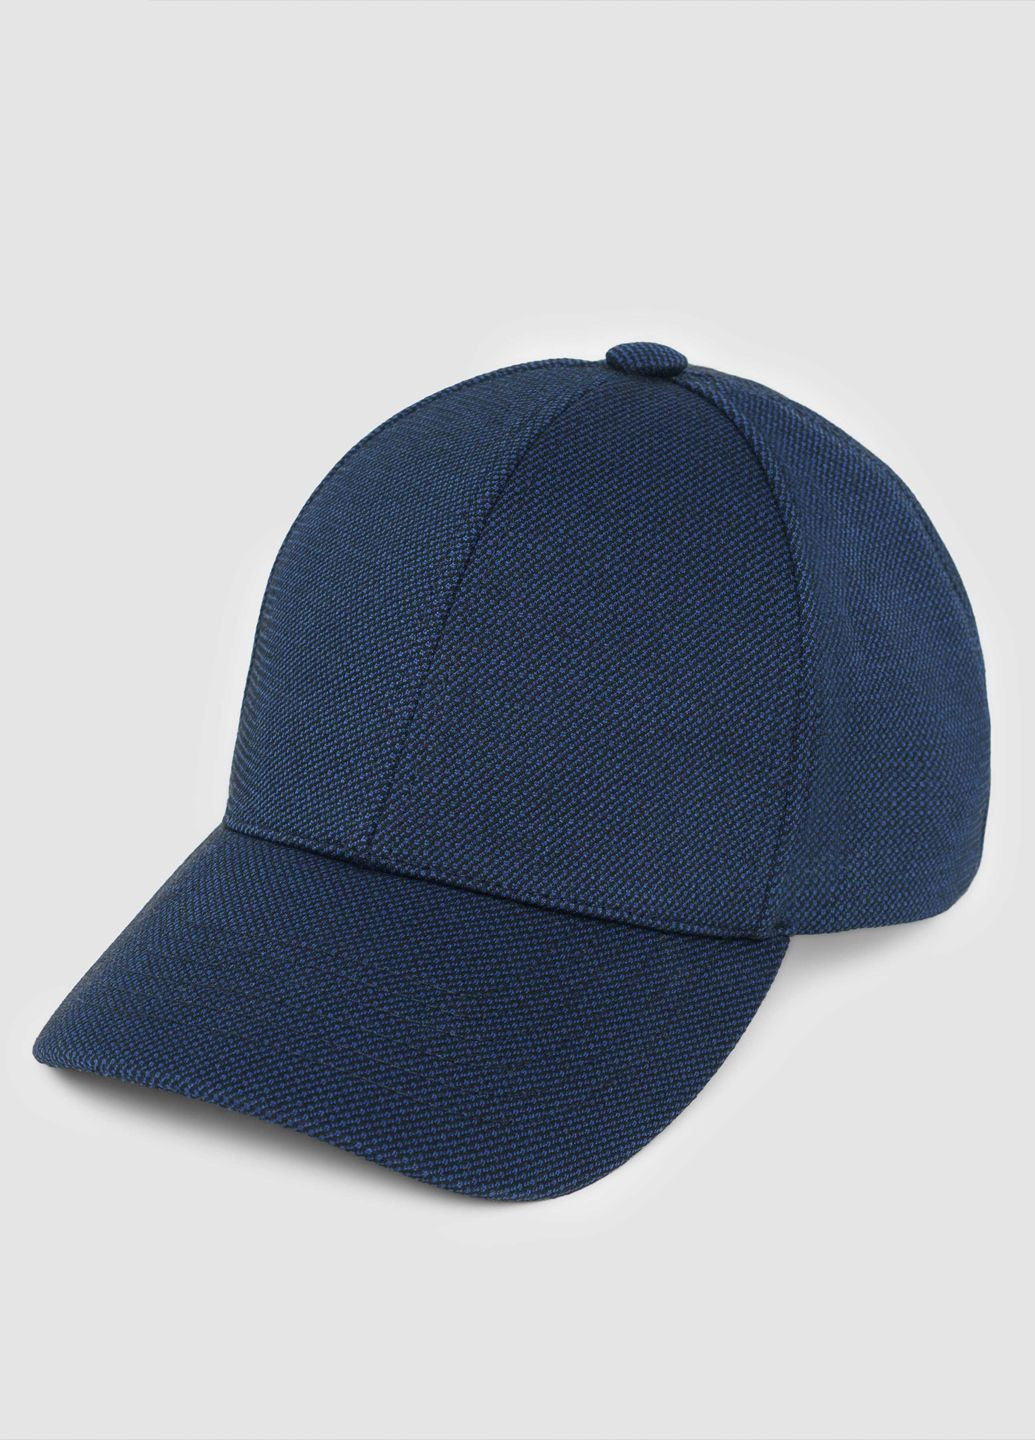 Кепка мужская синяя Arber кепка 2 (285766059)